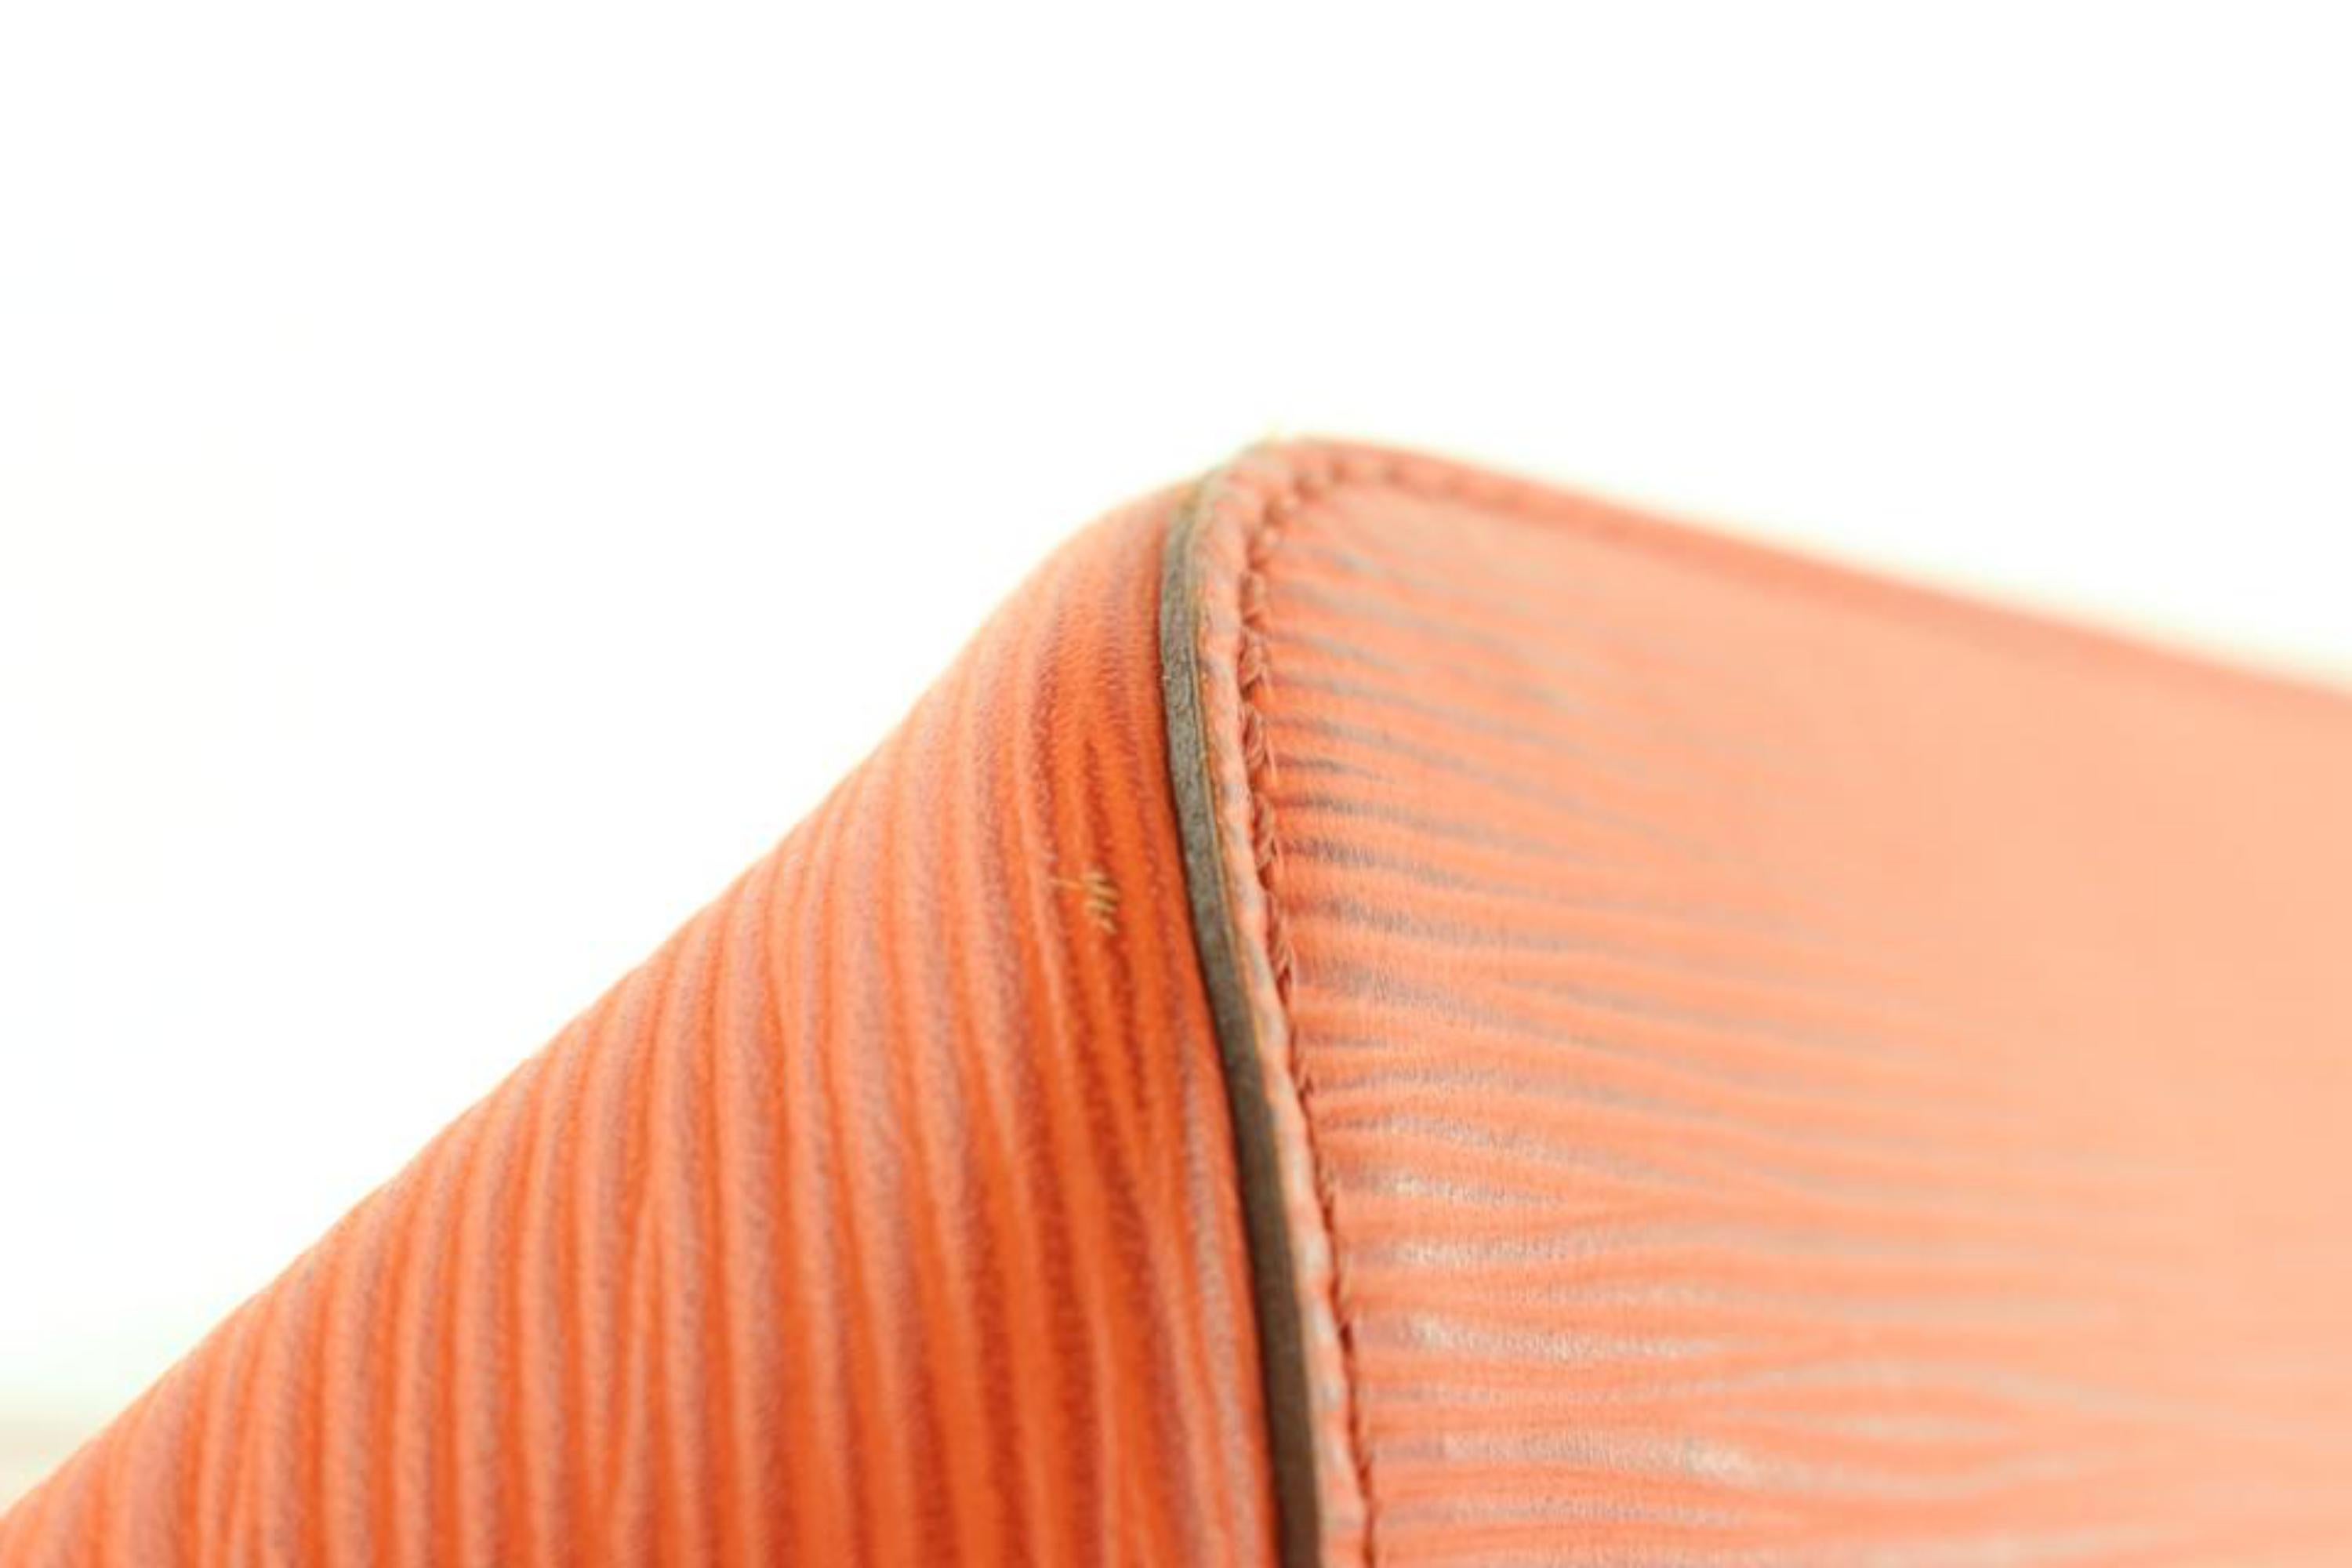 Louis Vuitton Neverfull MM Tote Bag aus Epi-Leder in Mandarin und Orange 855344 im Angebot 2